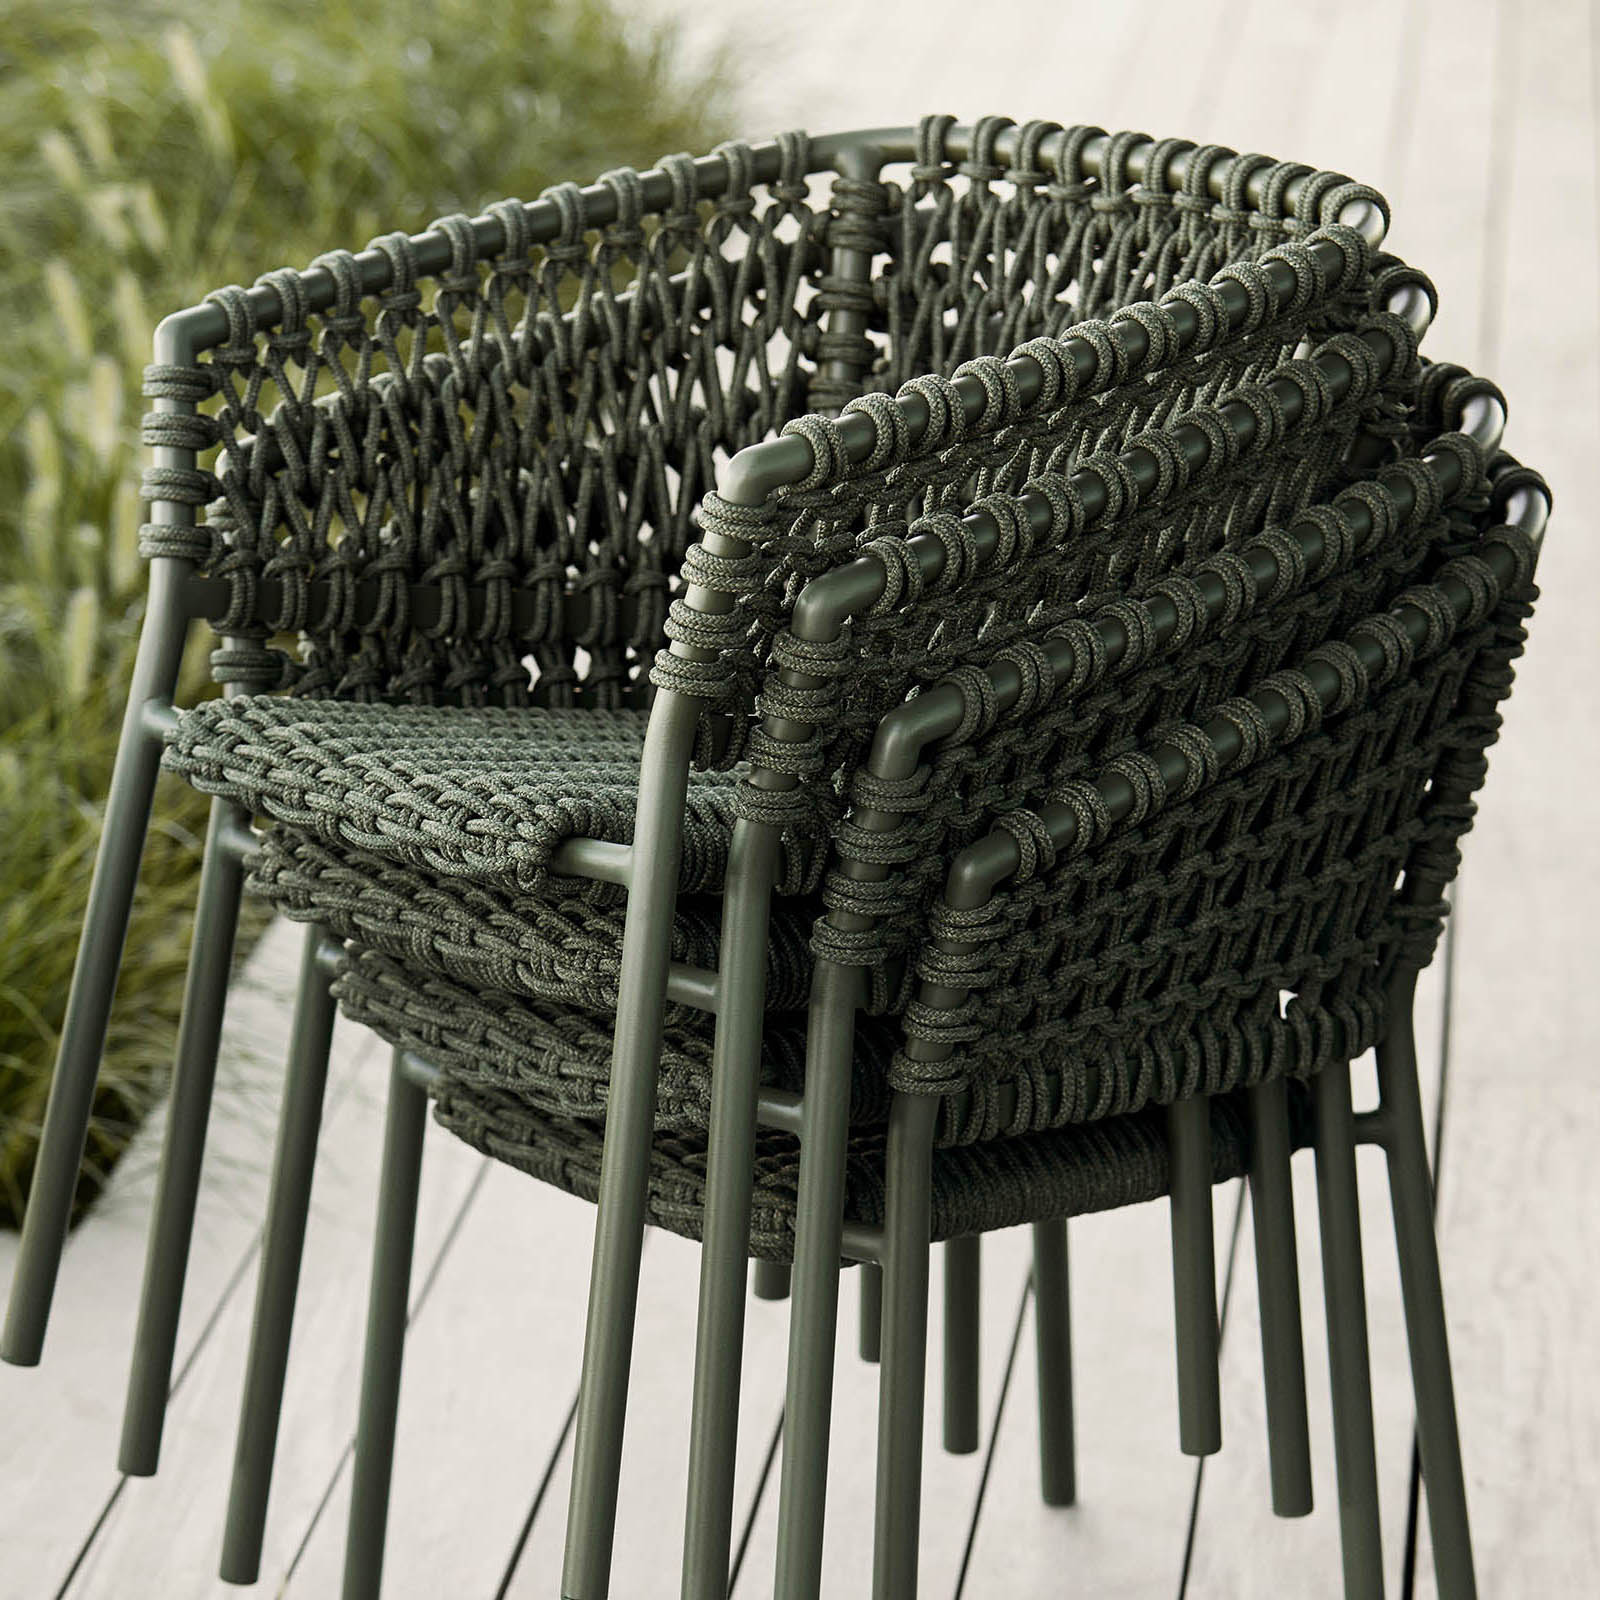 Ocean Stuhl aus Aluminium in Natural mit Kissen aus Cane-line Wove in Light Brown